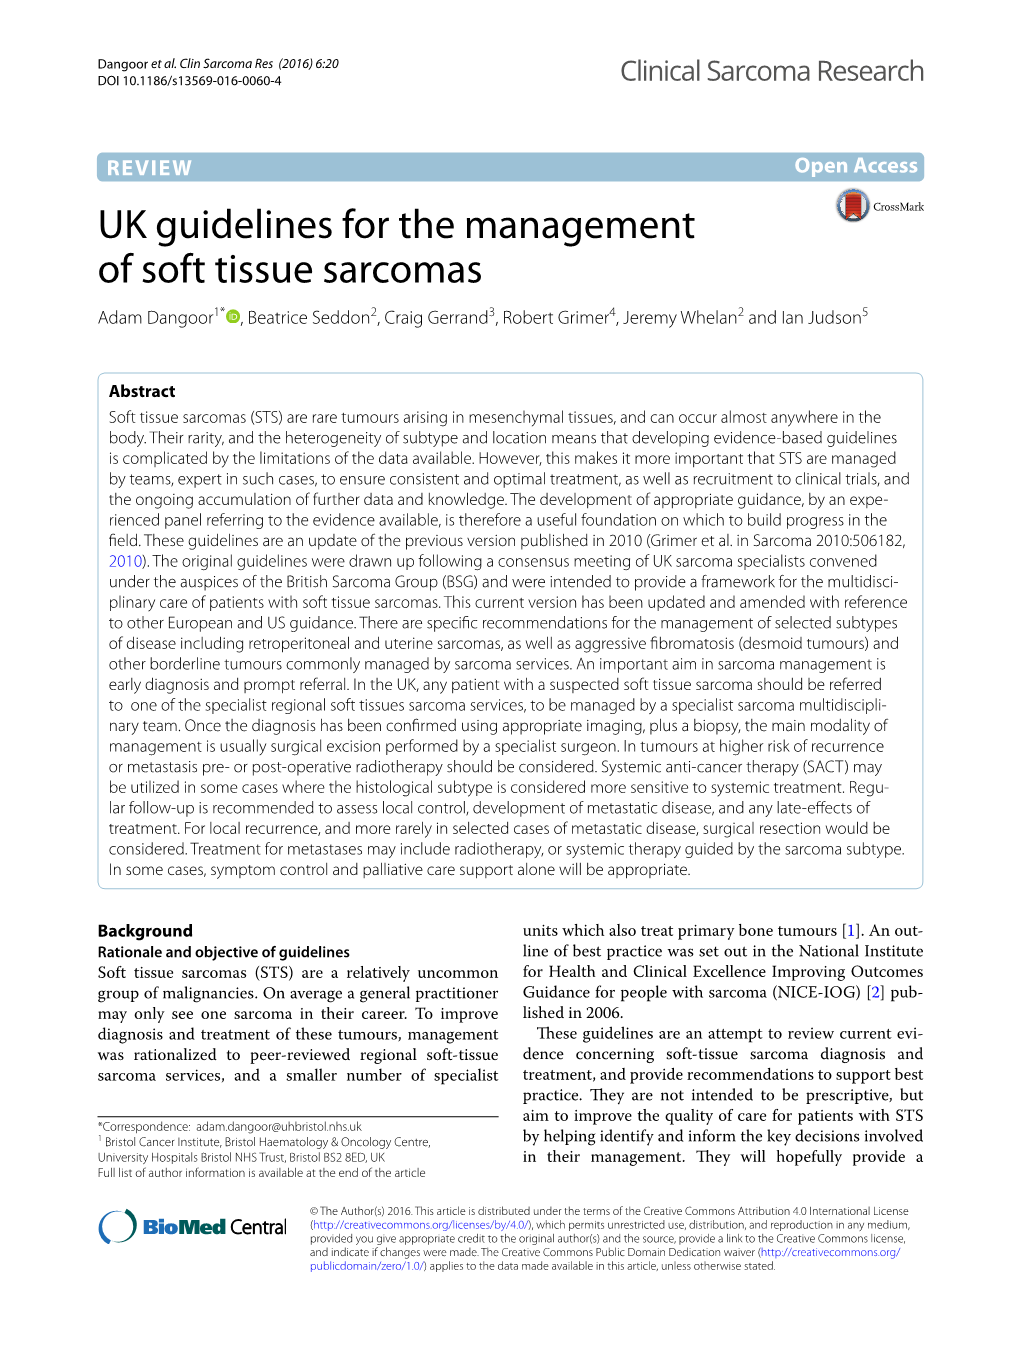 UK Guidelines for the Management of Soft Tissue Sarcomas Adam Dangoor1* , Beatrice Seddon2, Craig Gerrand3, Robert Grimer4, Jeremy Whelan2 and Ian Judson5